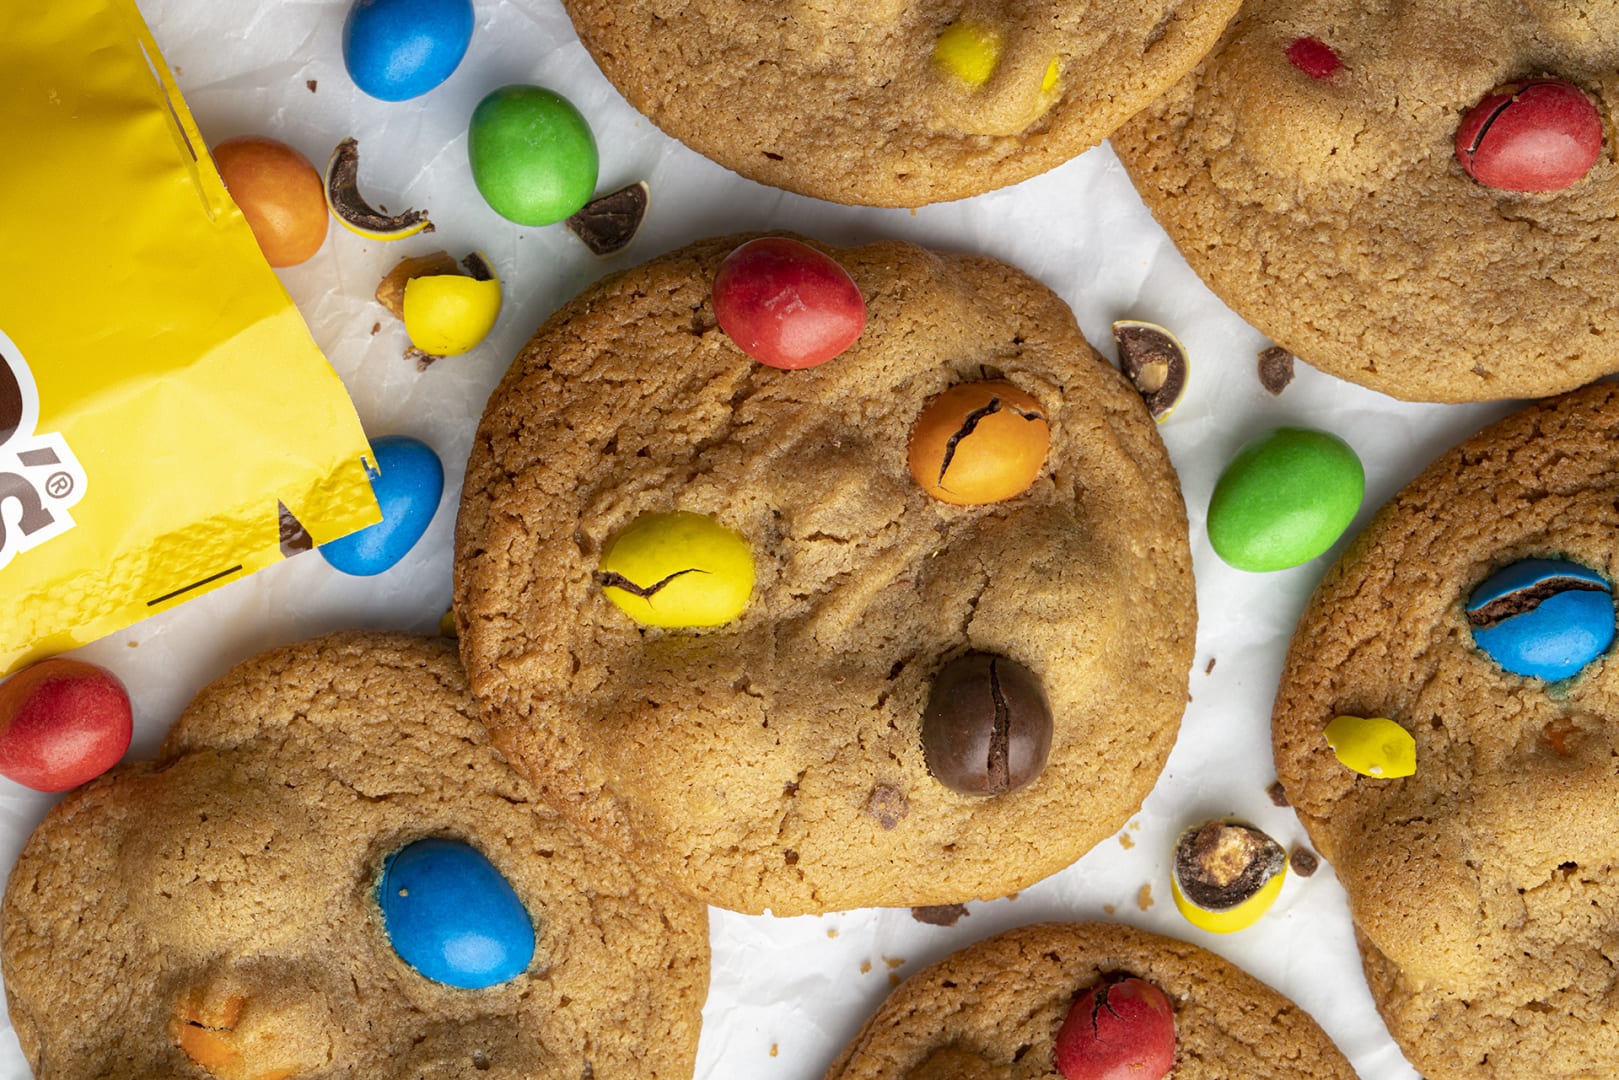 4-Ingredient Peanut M&M's Cookies Recipe (gluten-free)